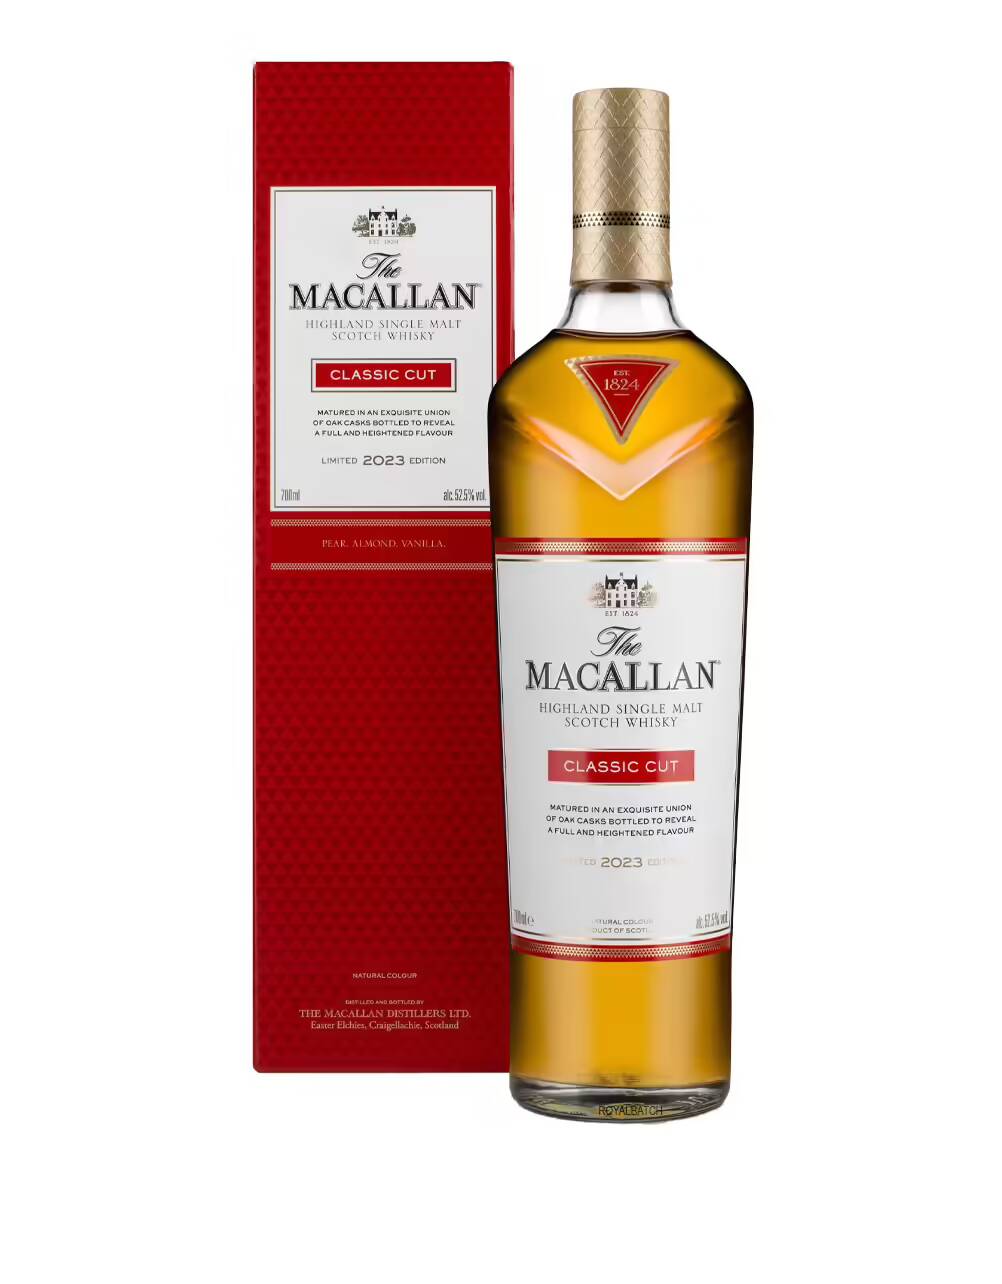 The Macallan Classic Cut Limited Edition Single Malt Scotch Whisky 2023